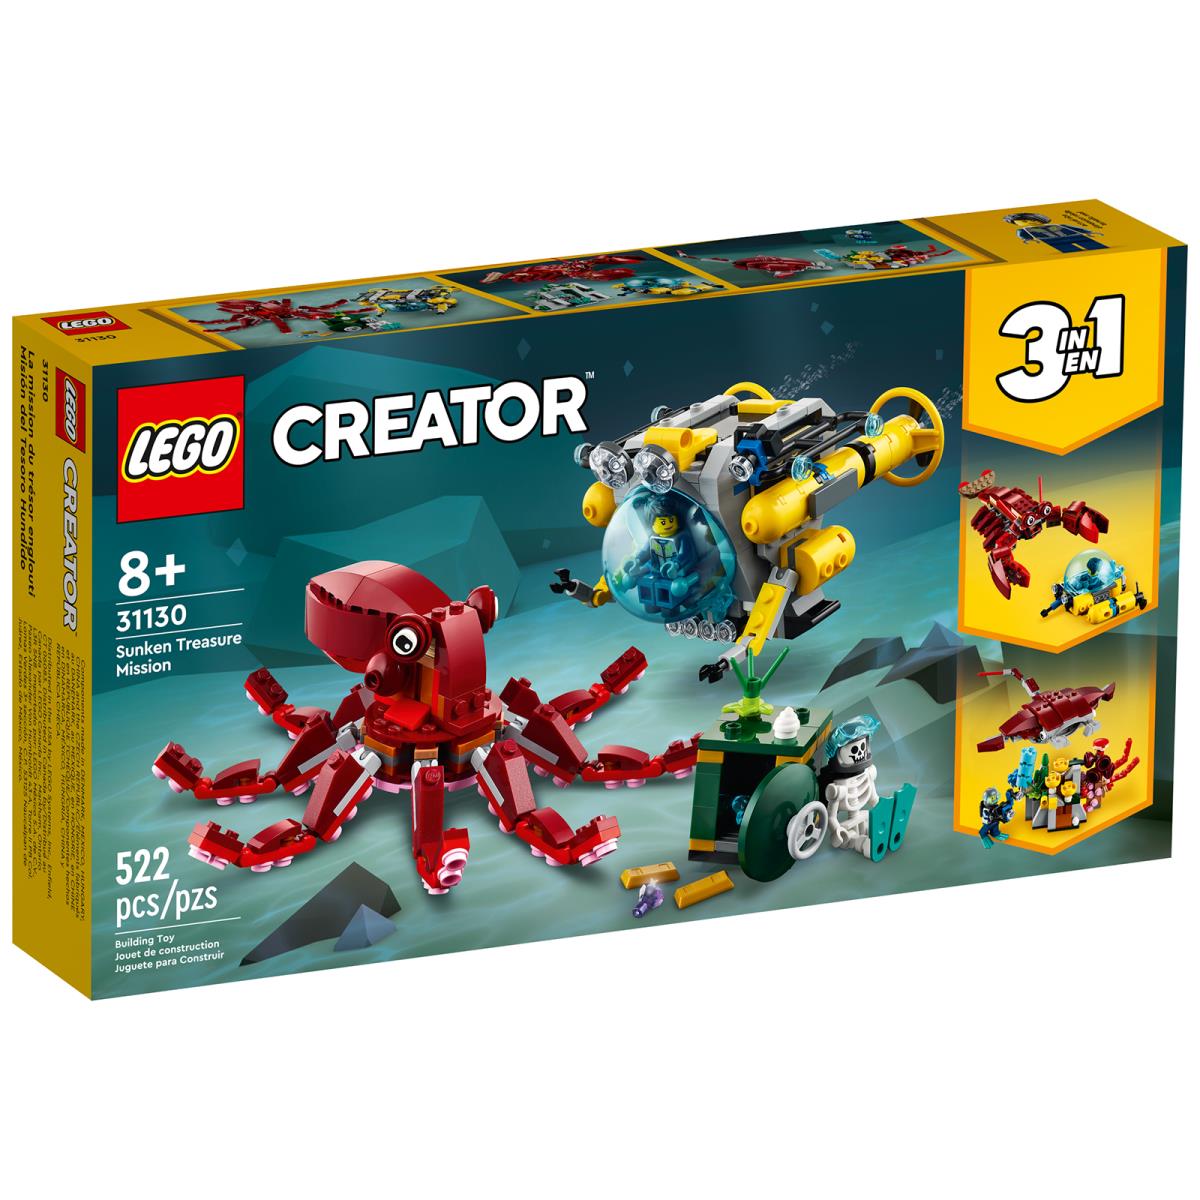 Lego Creator Sunken Treasure Mission Building Set 31130